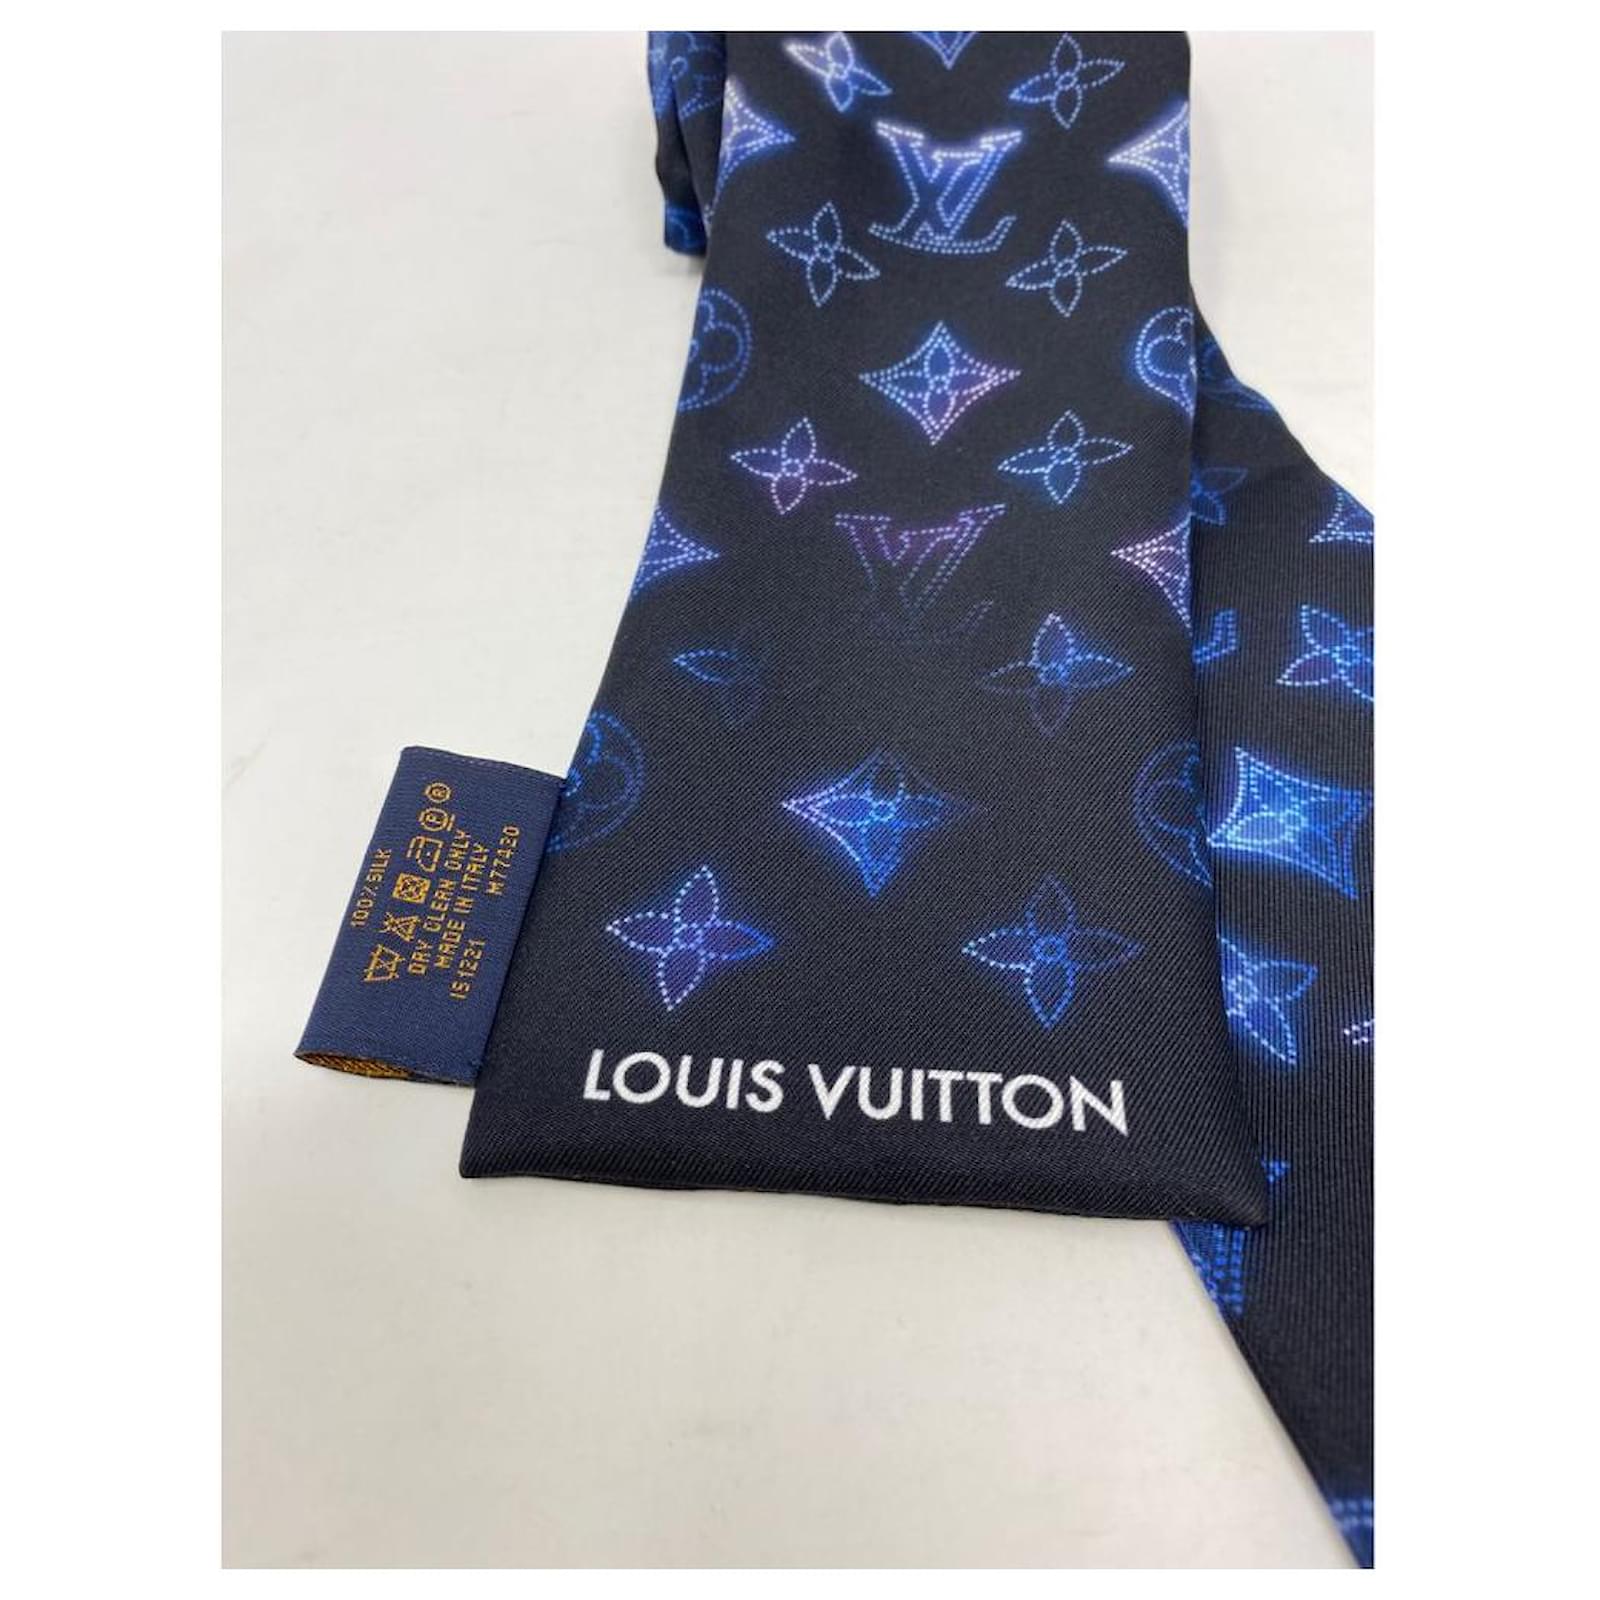 Louis Vuitton Flight Mode Bandana, Blue, One Size